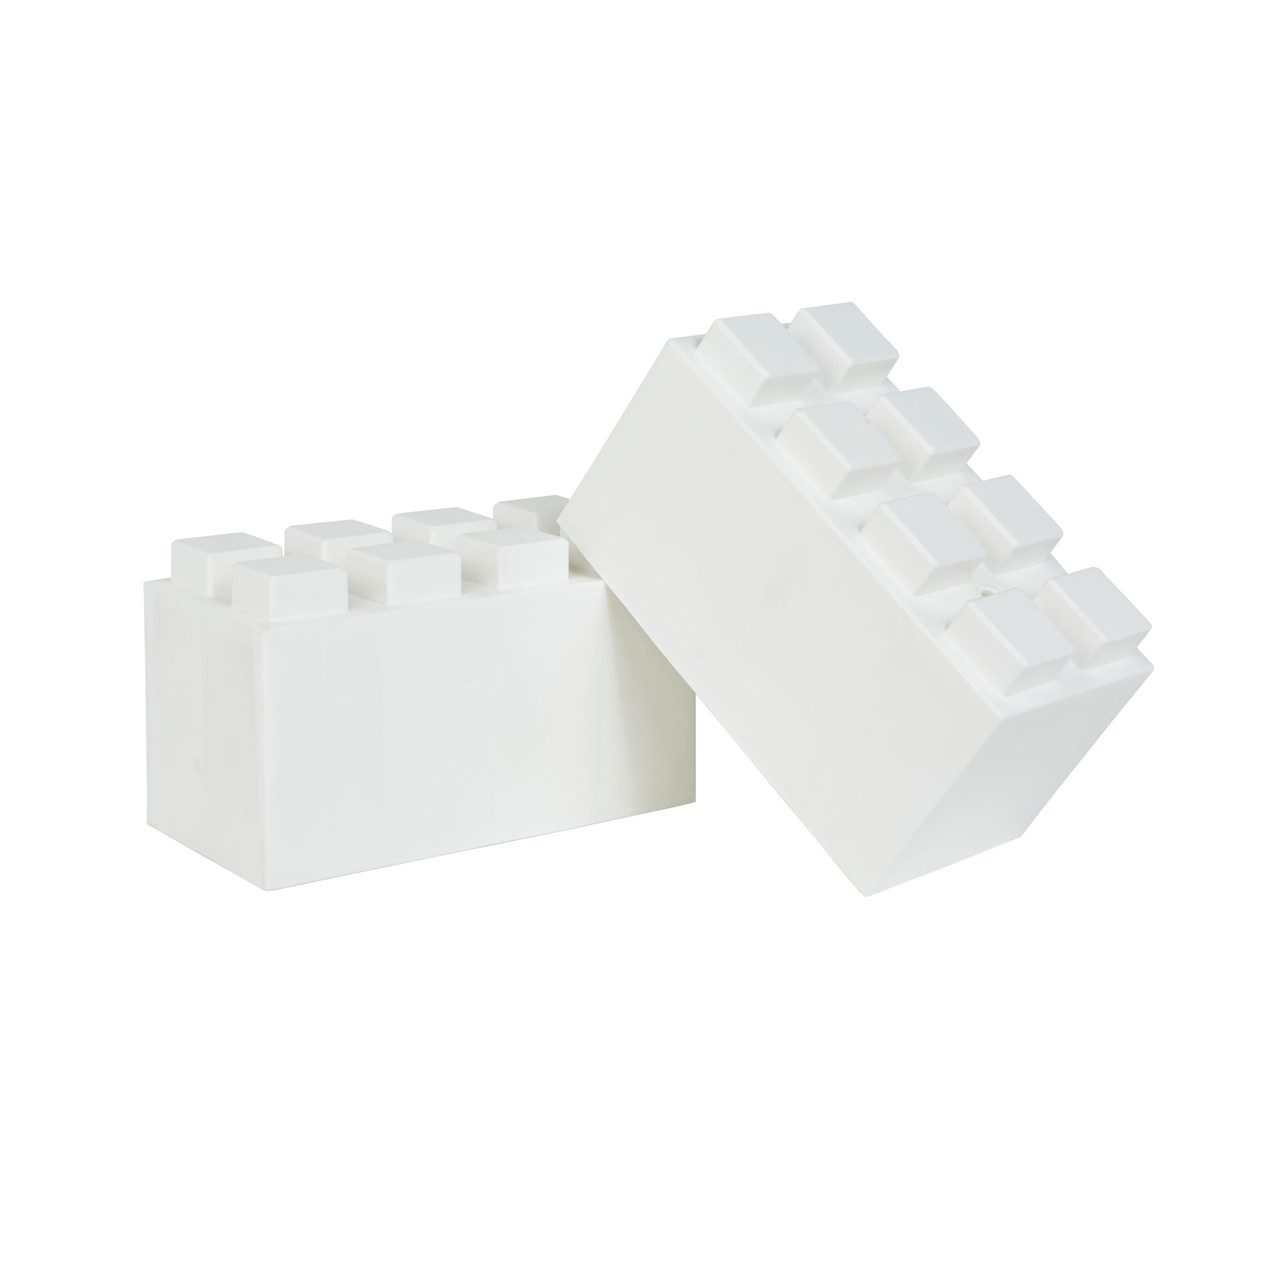 50 Brown Building Blocks EverBlock Modular Building Blocks Single Color Combo Pack 